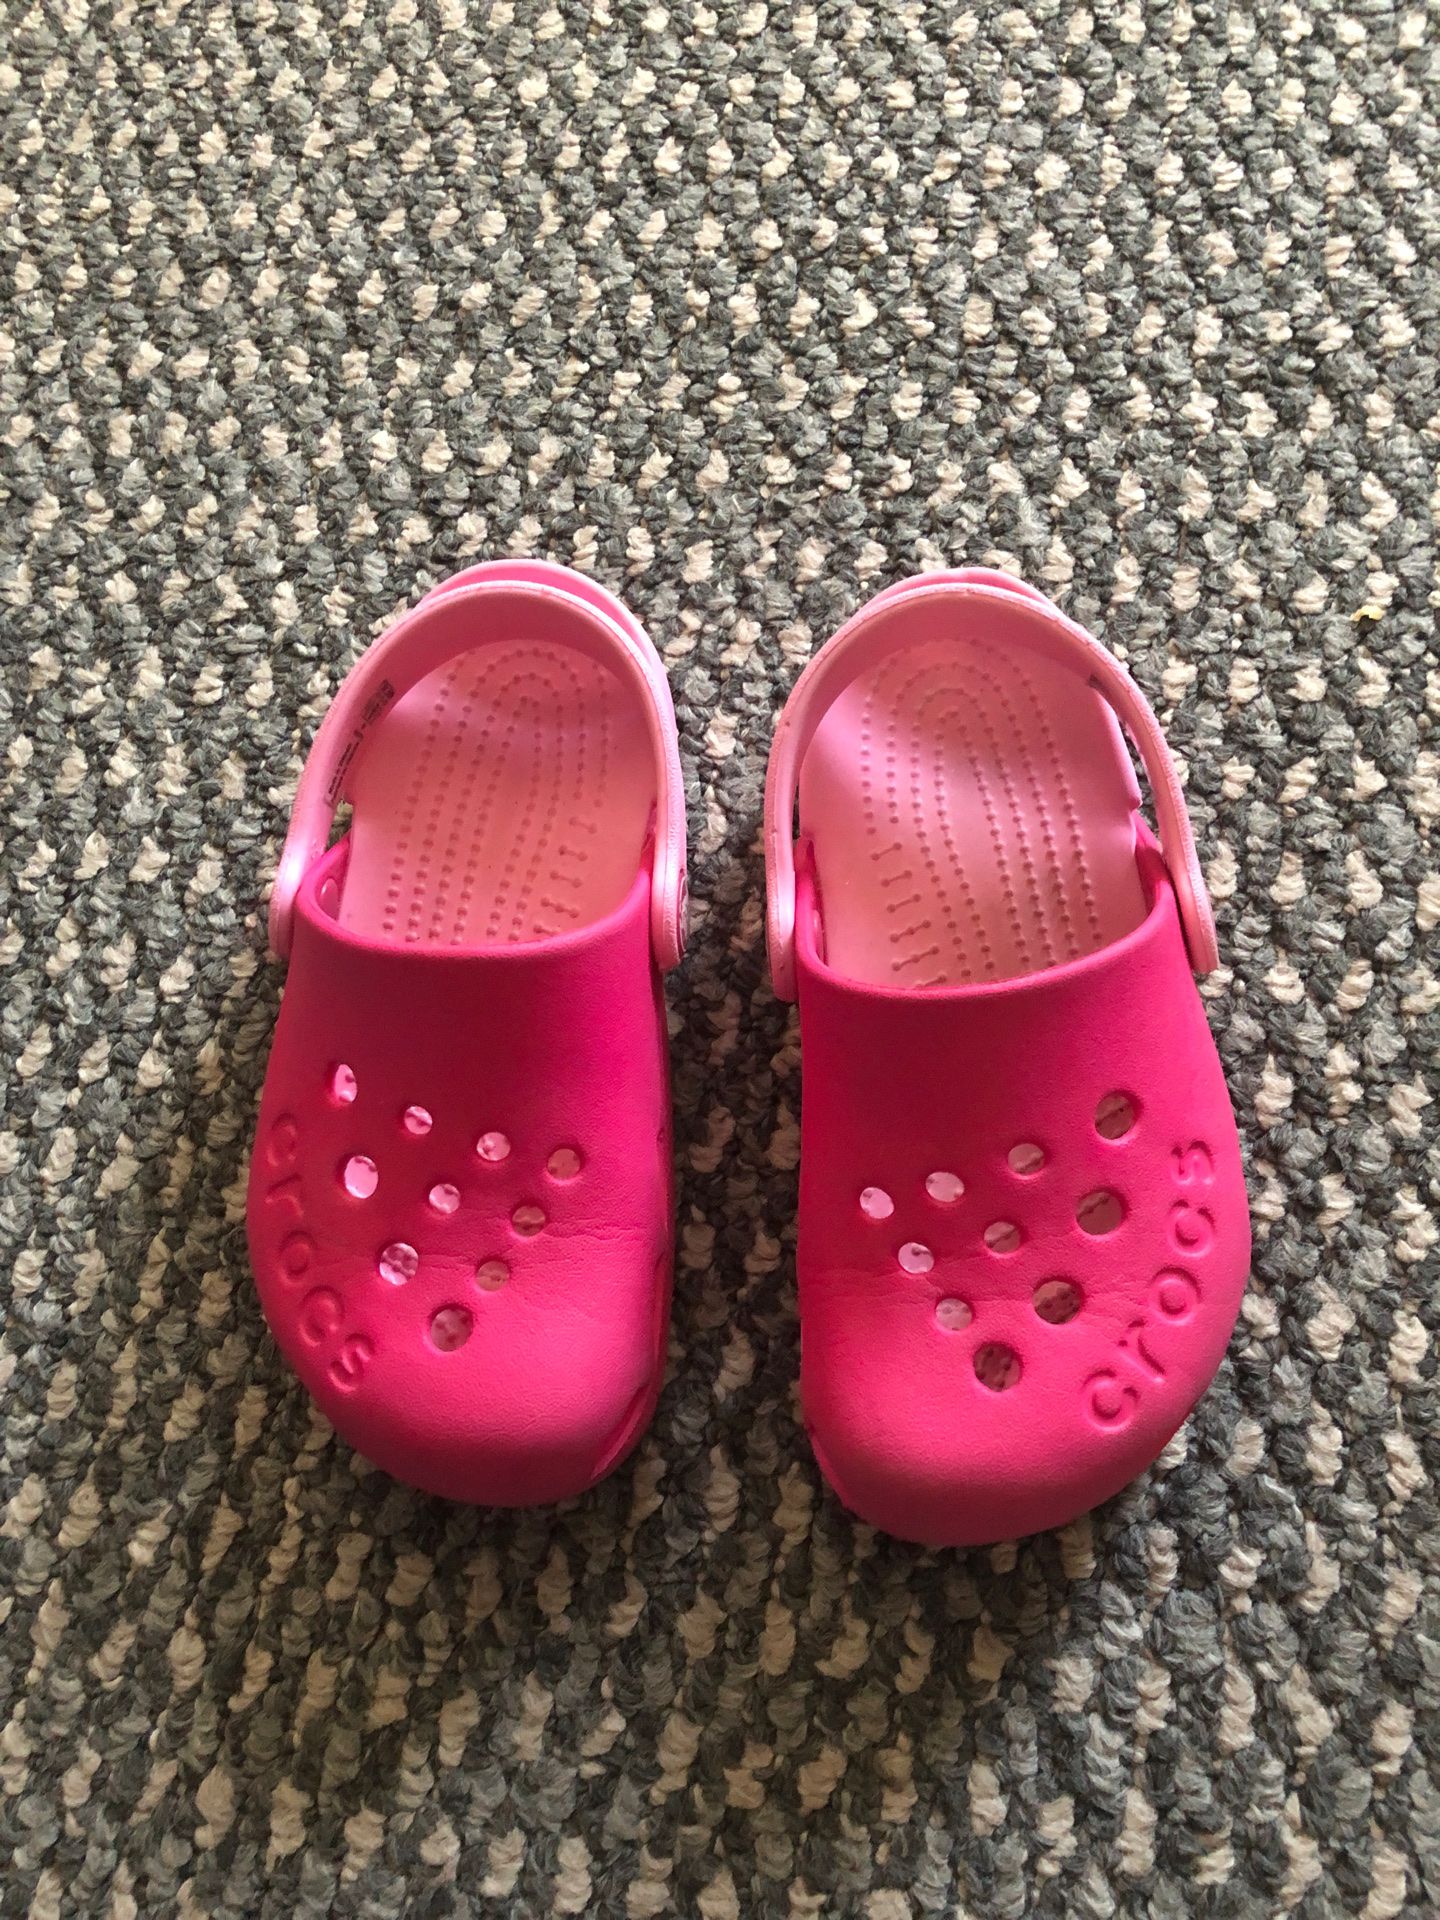 Crocs little girls size 9